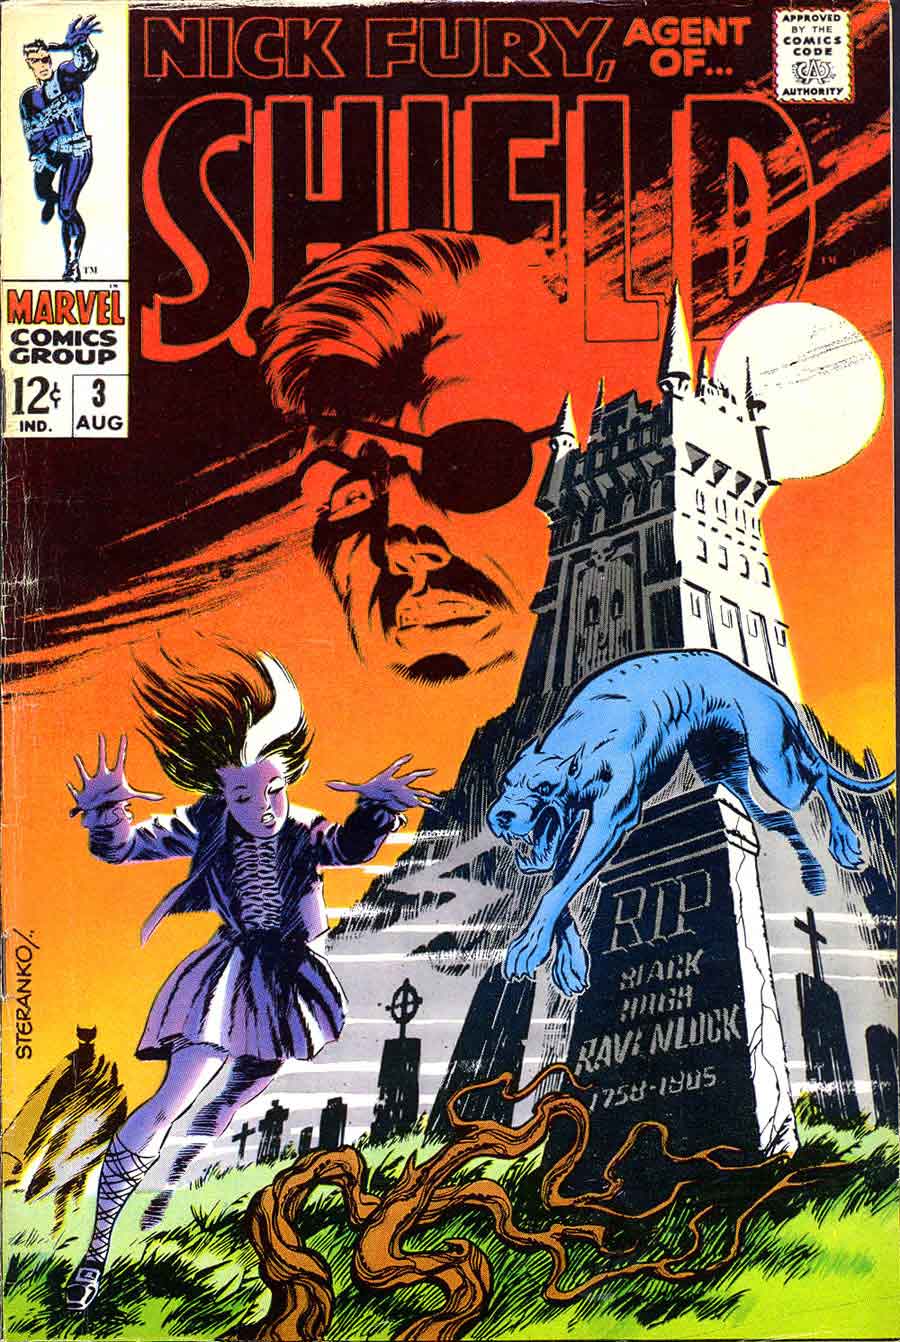 Nick Fury Agent of Shield v1 #3 1960s marvel comic book cover art by Jim Steranko